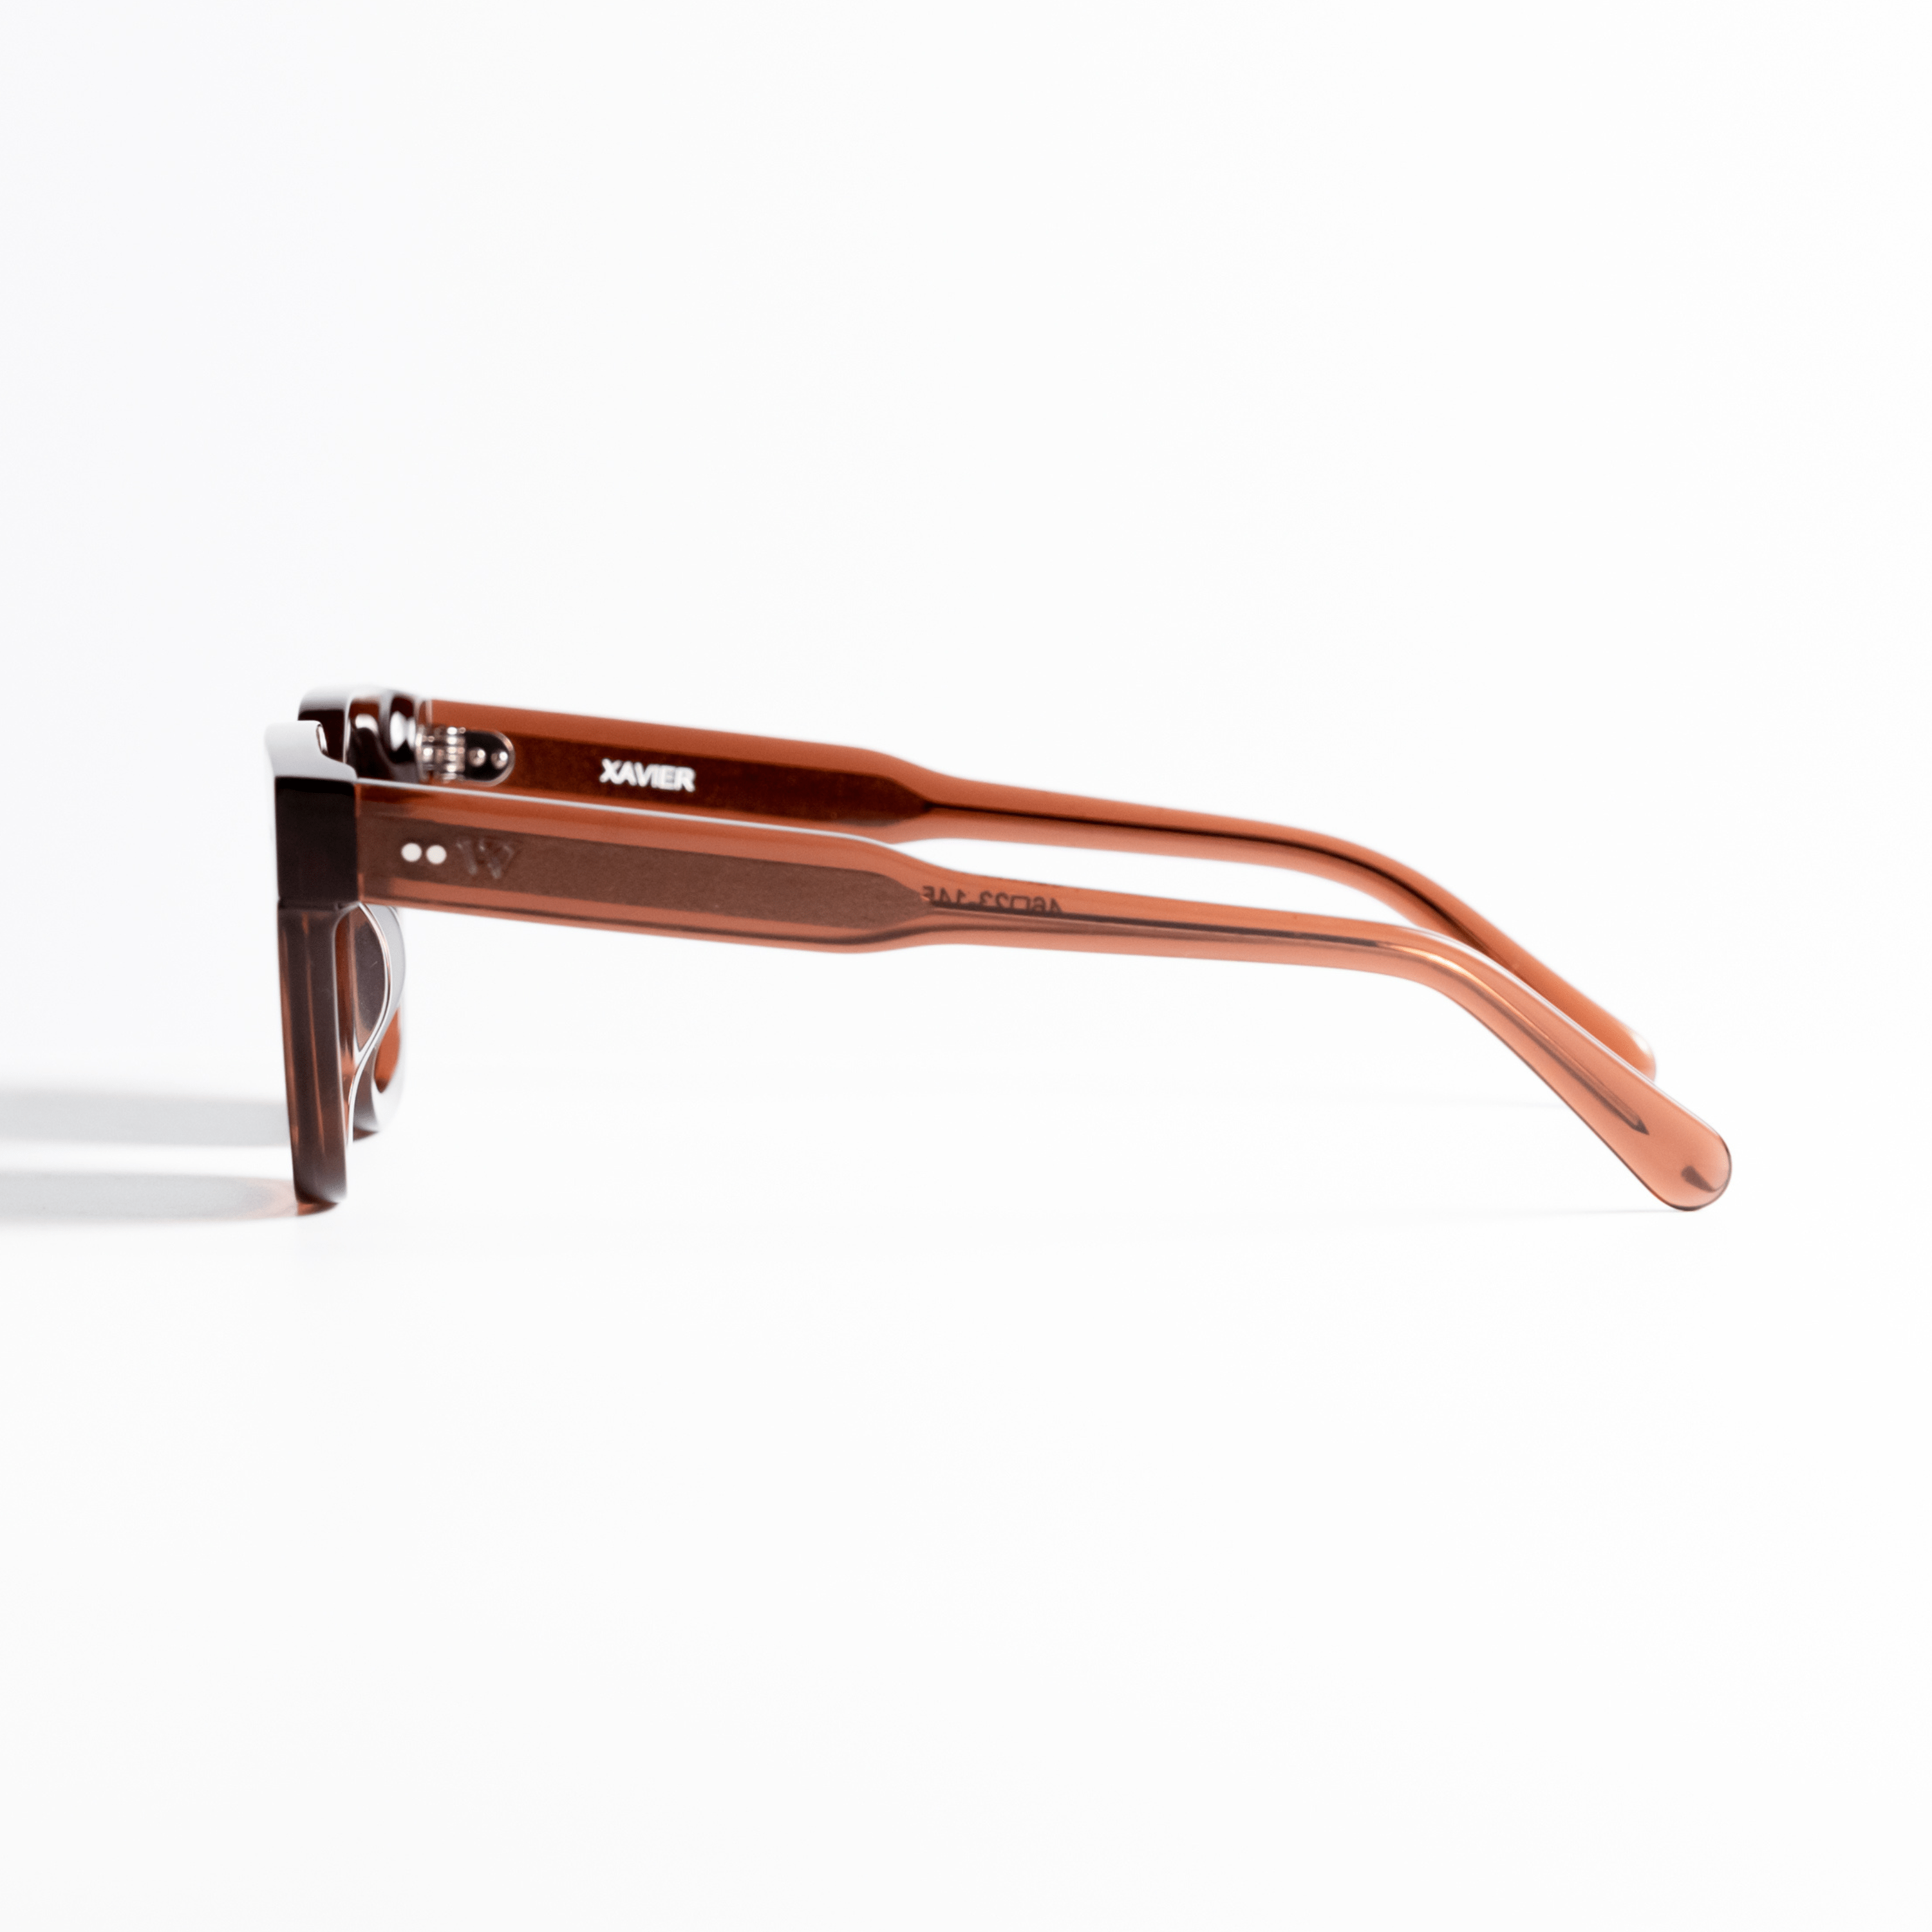 Walter Hill Sunglasses Brown / Standard / Polarized Cat.3 XAVIER - Brown